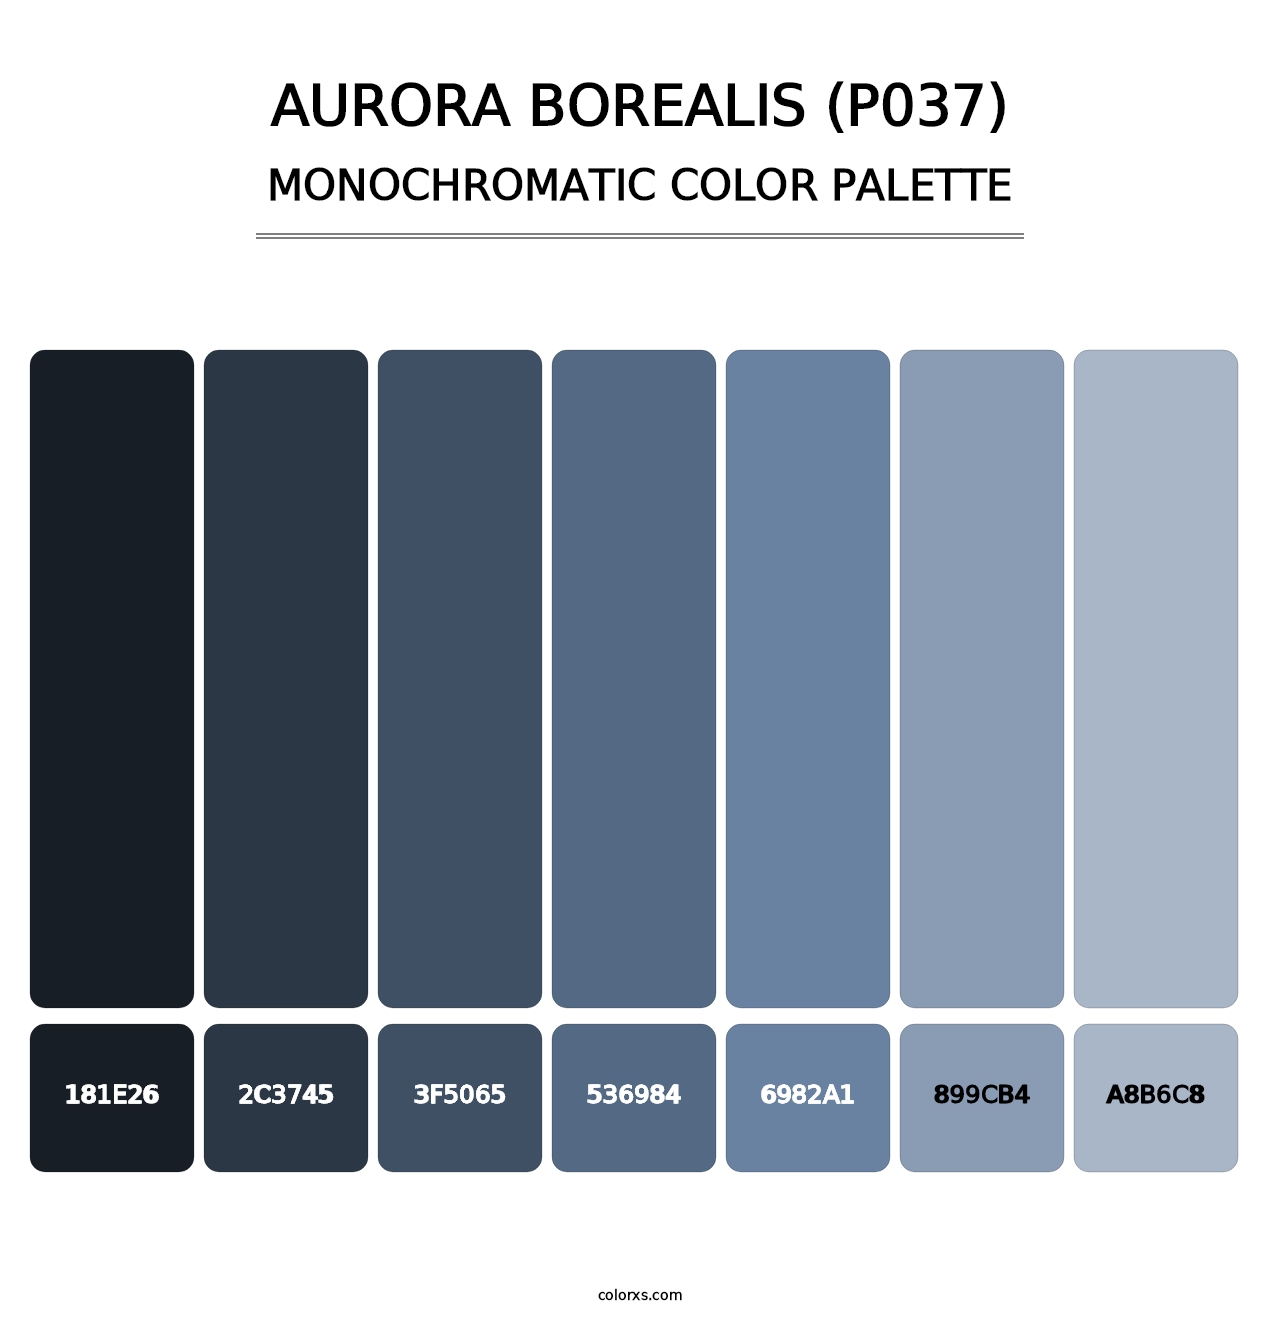 Aurora Borealis (P037) - Monochromatic Color Palette